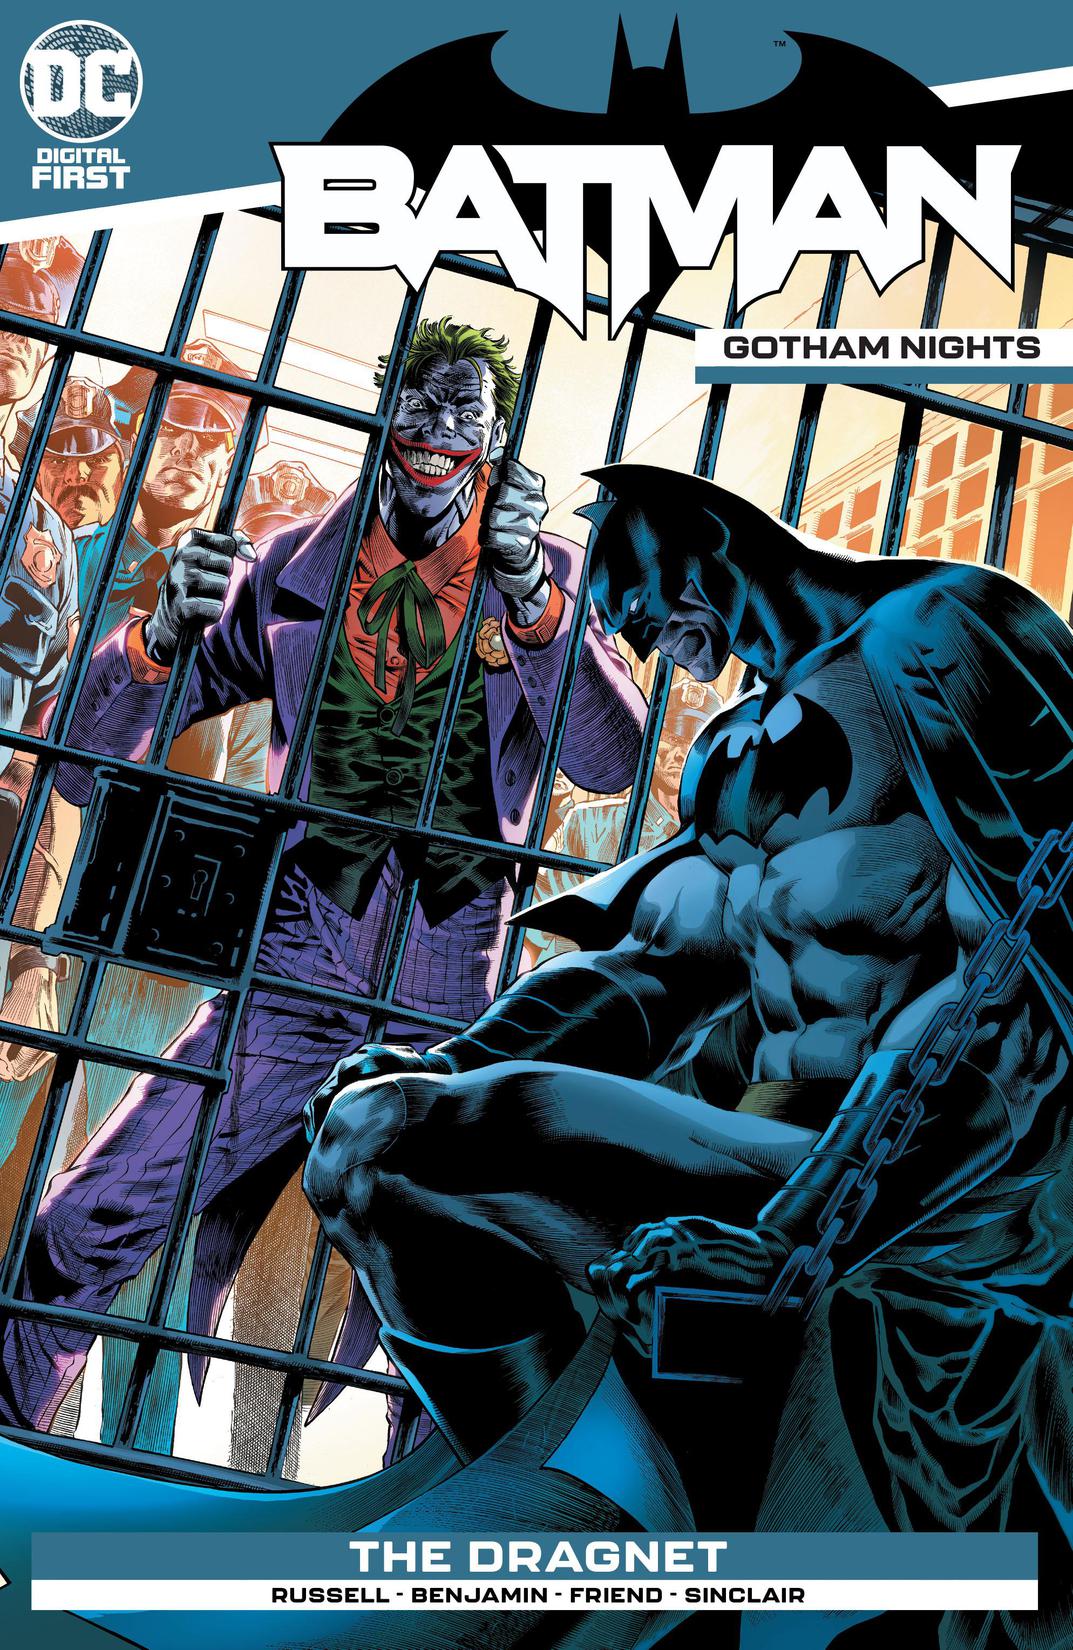 Batman: Gotham Nights #4 preview images